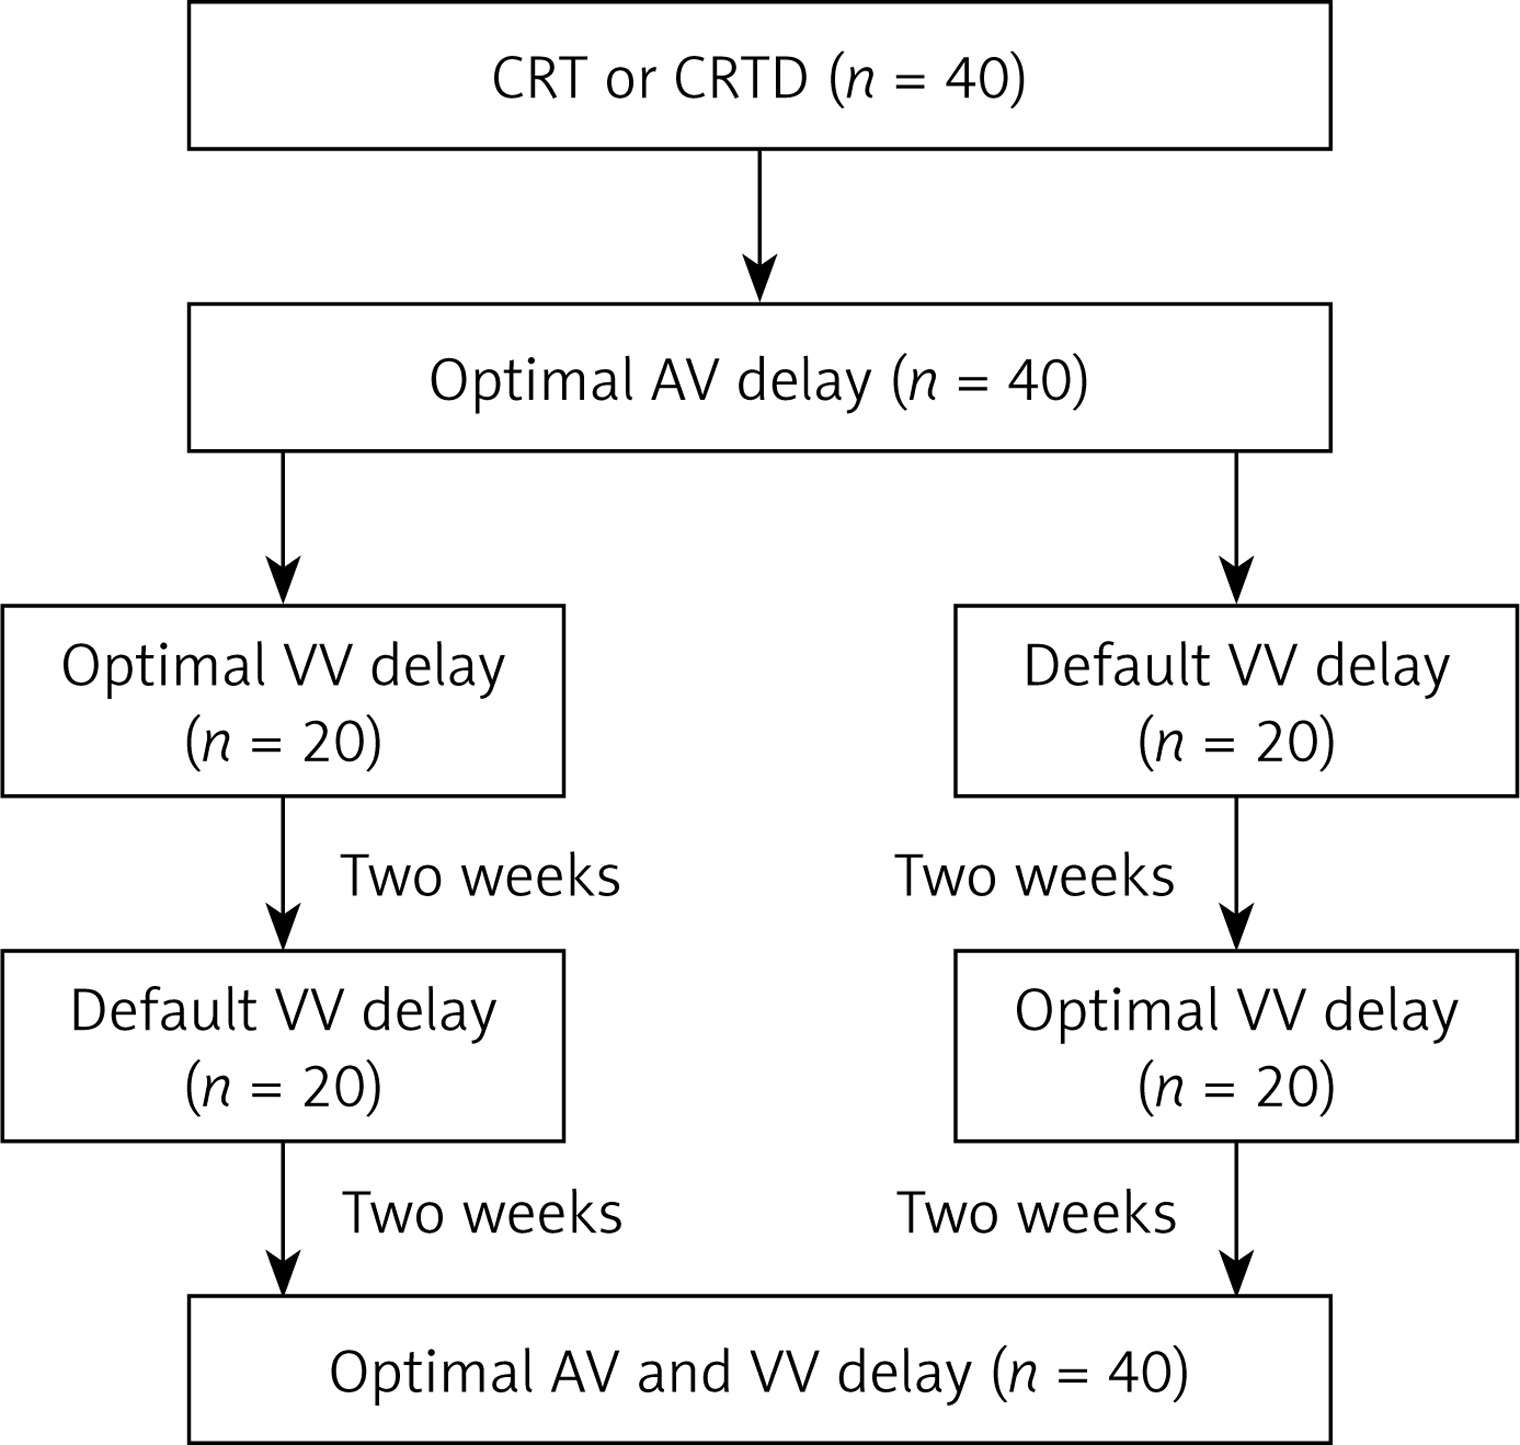 Optimization of the AV delay in a patient with complete AV block